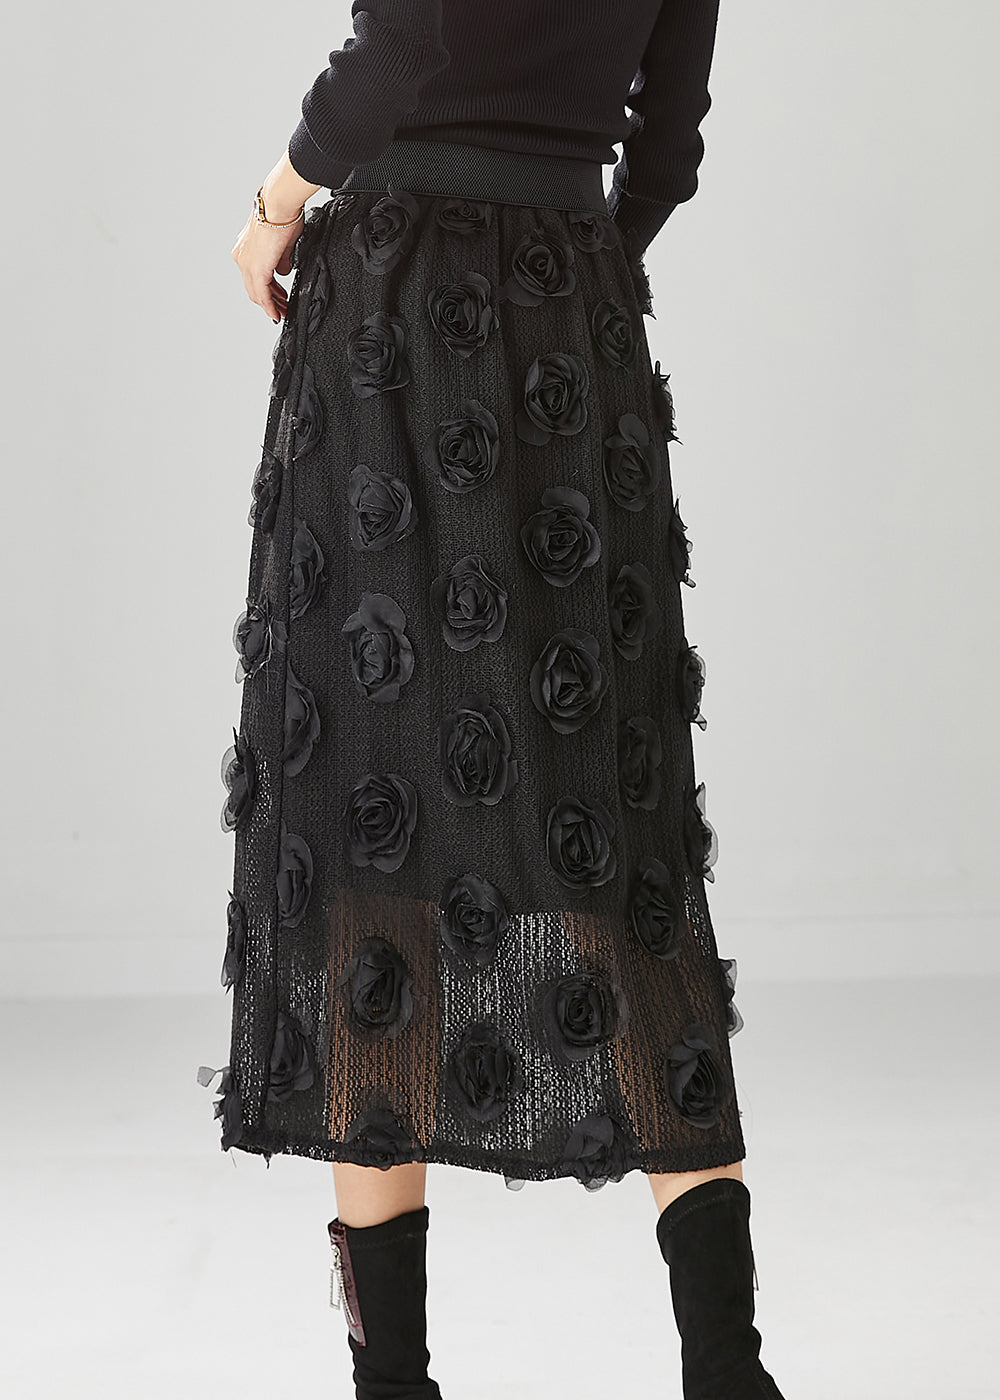 Diy Black High Waist Three-dimensional Floral Knit Skirt Fall